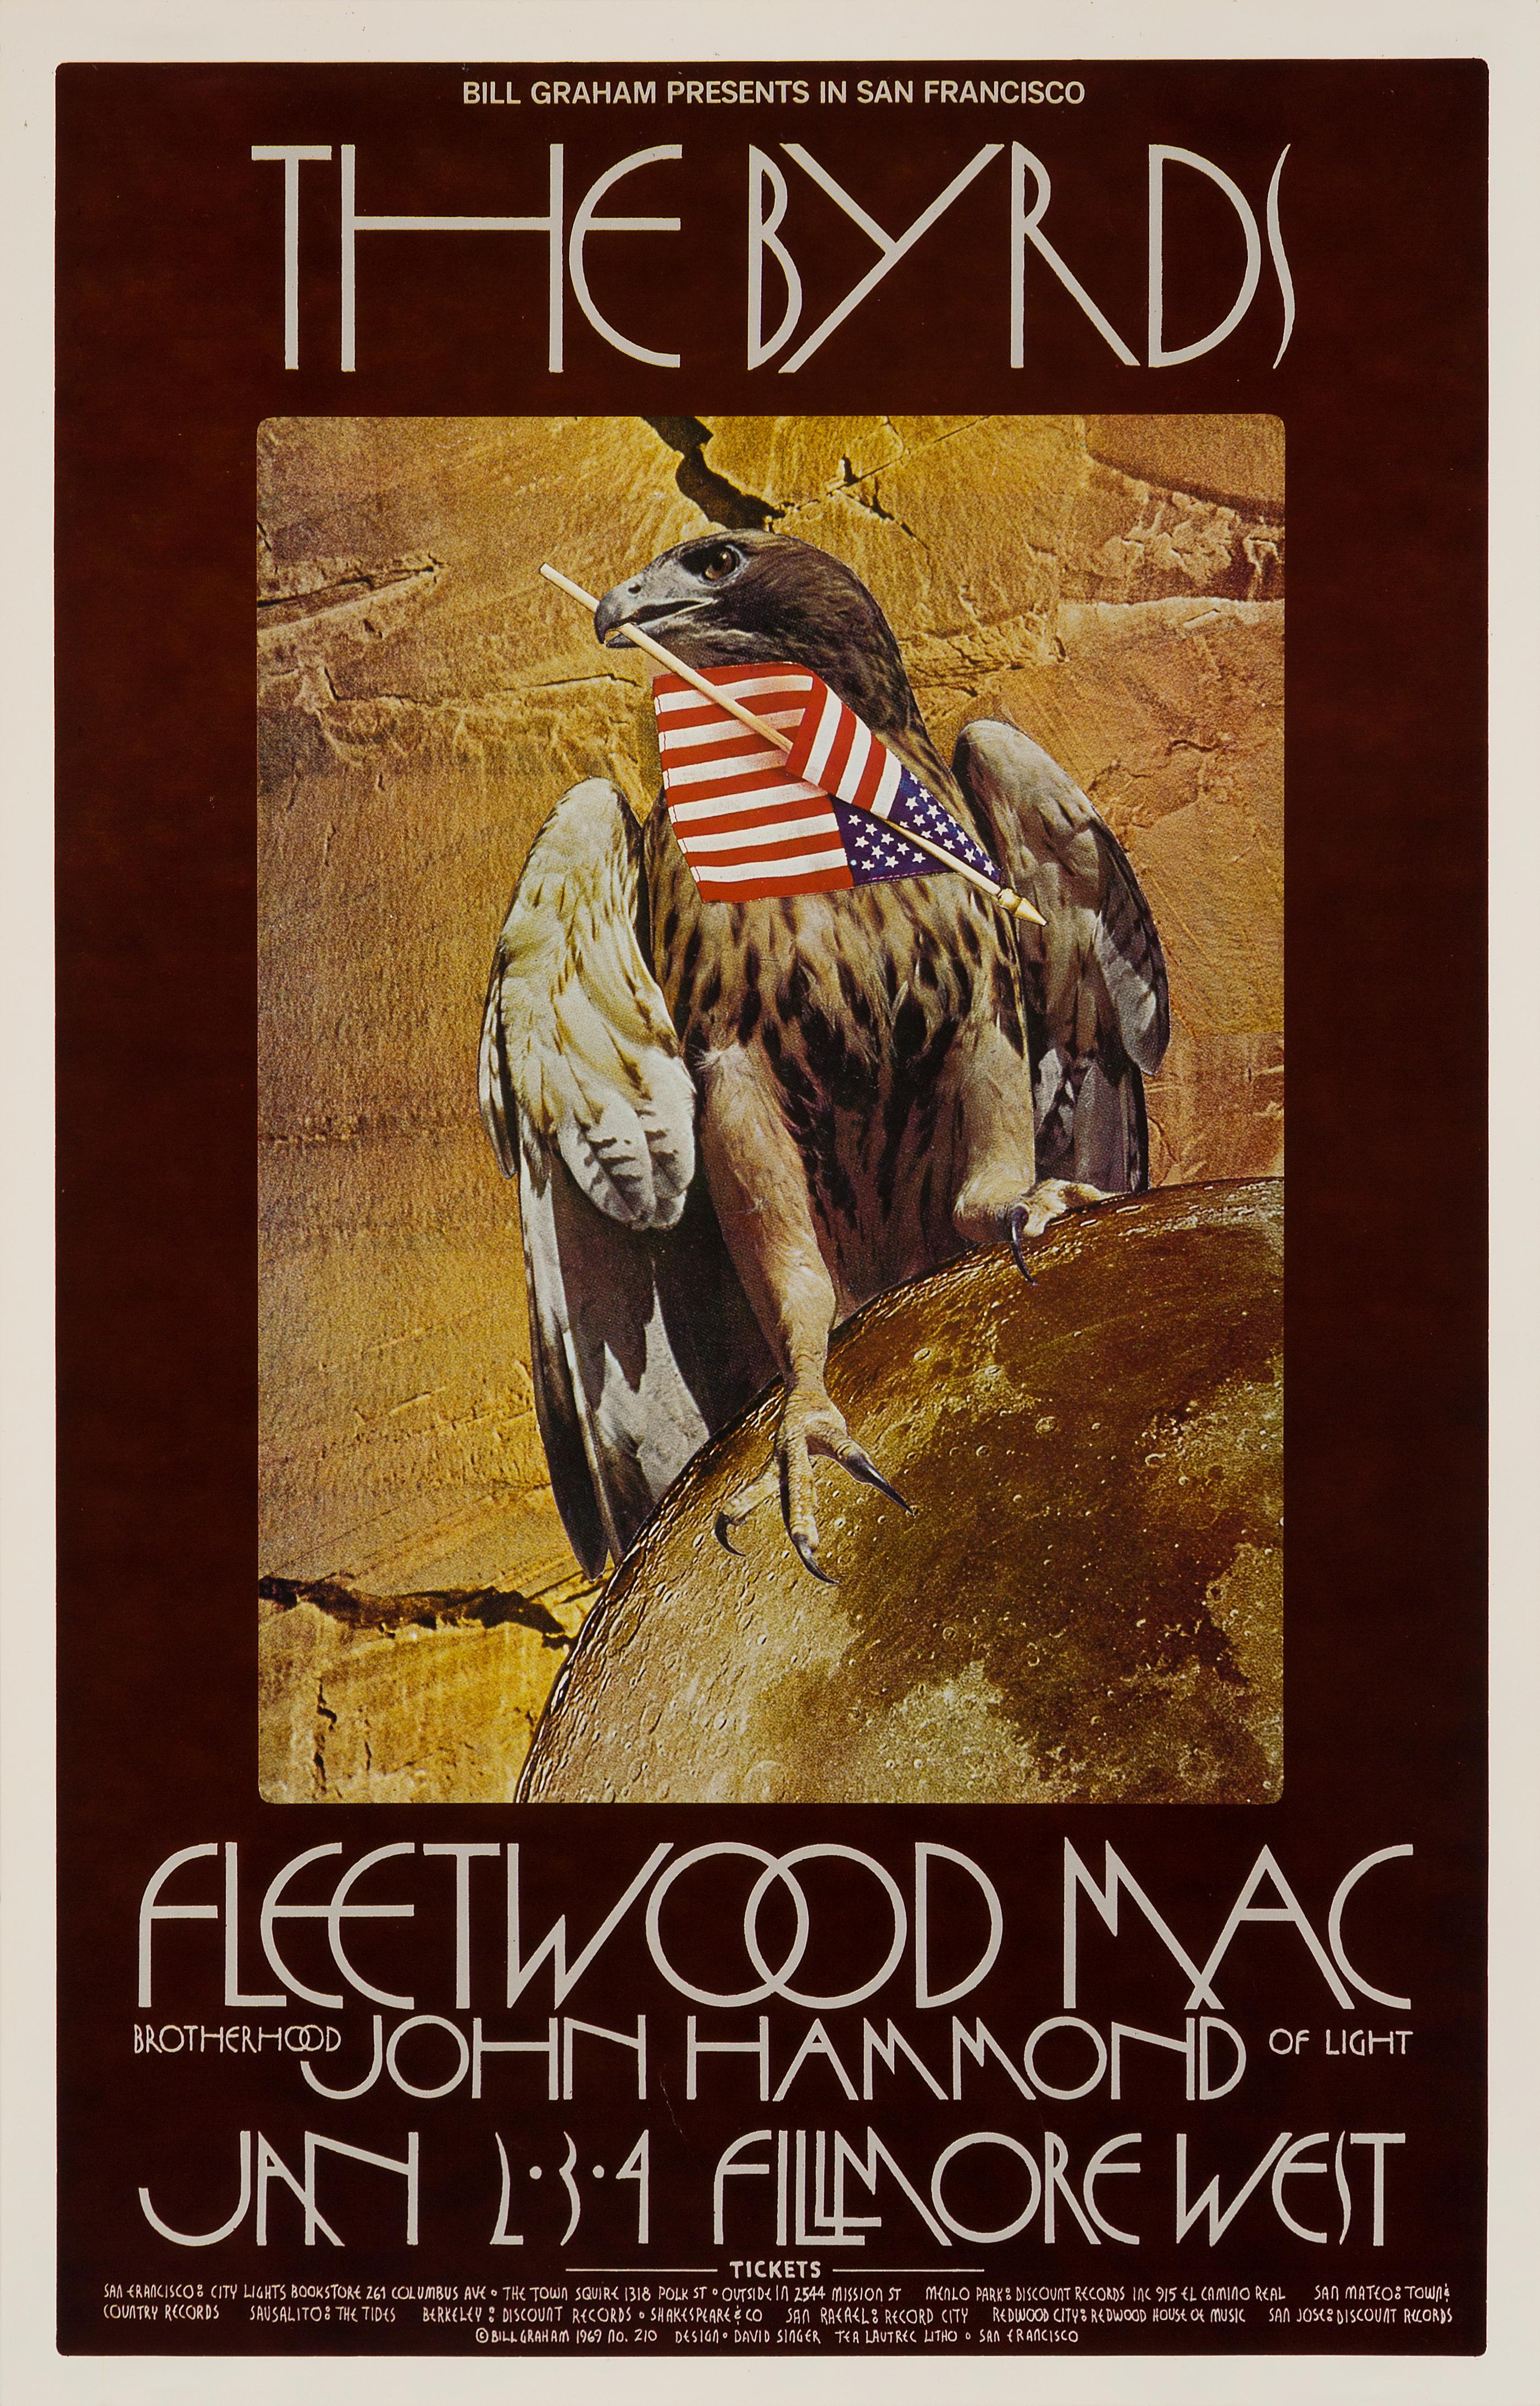 vintage fleetwood mac poster